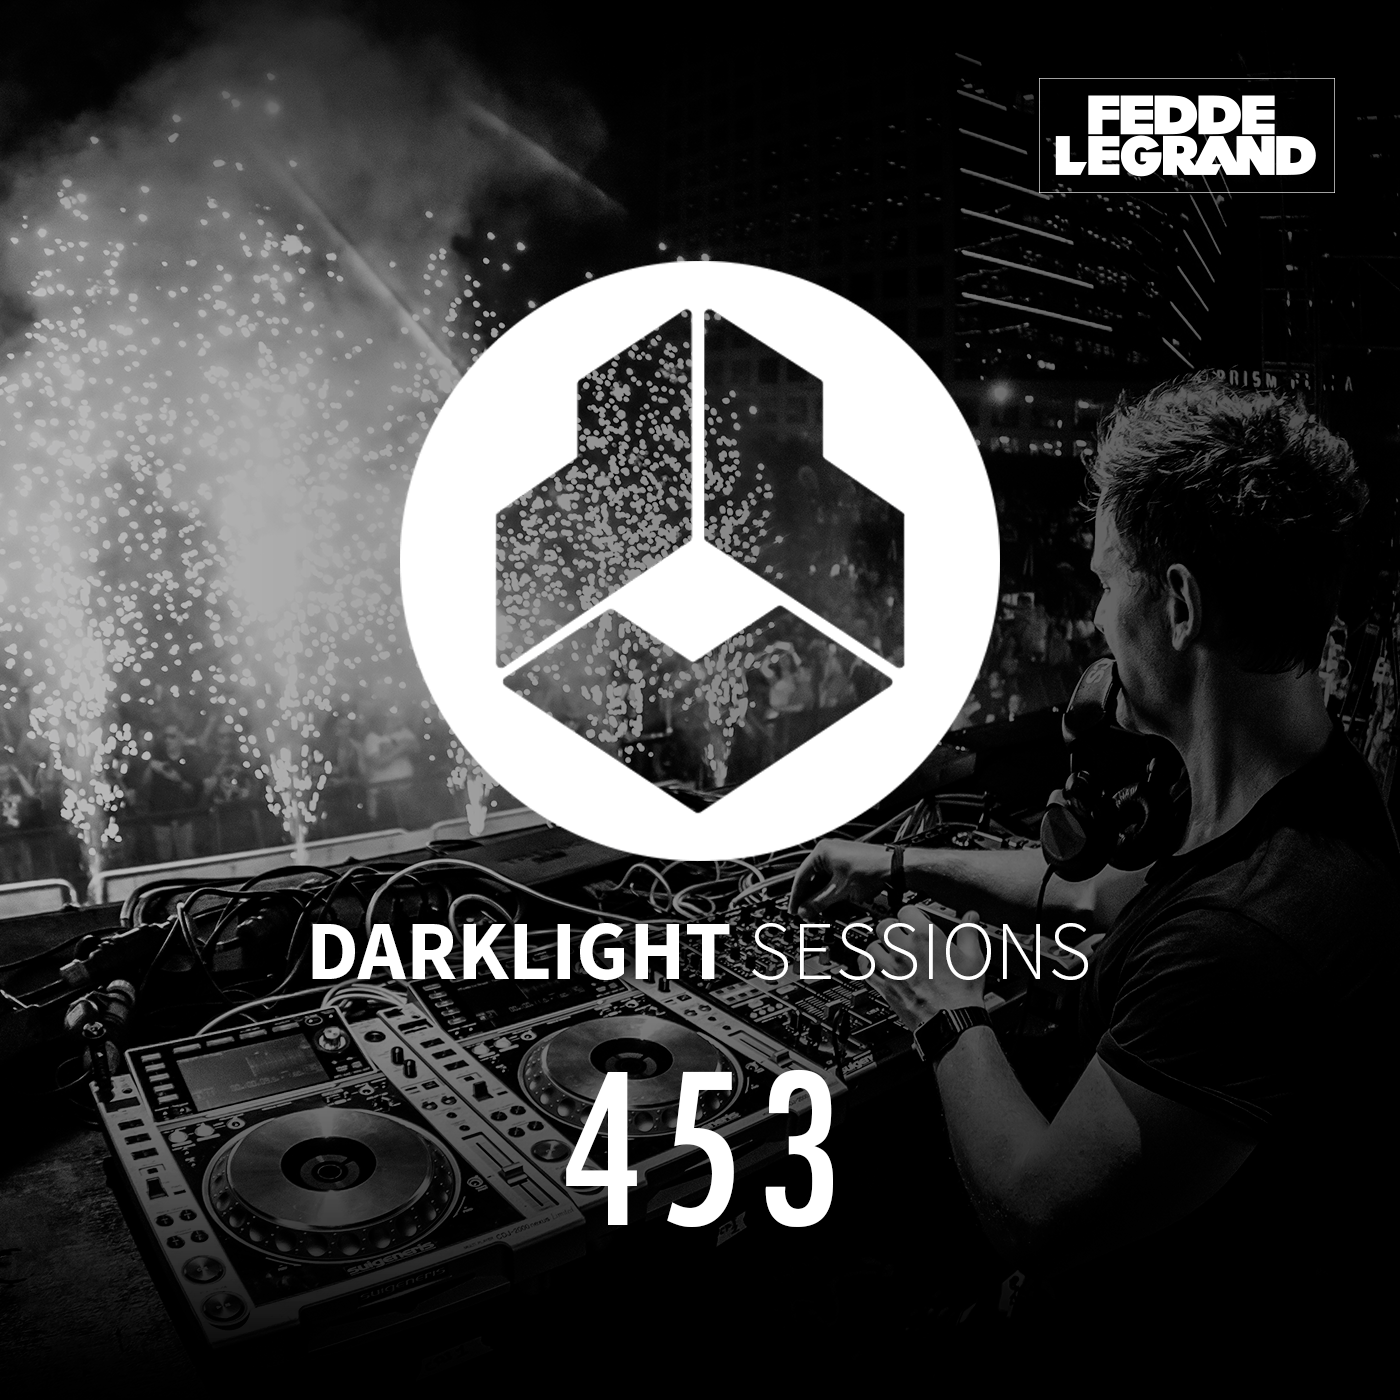 Darklight Sessions 453